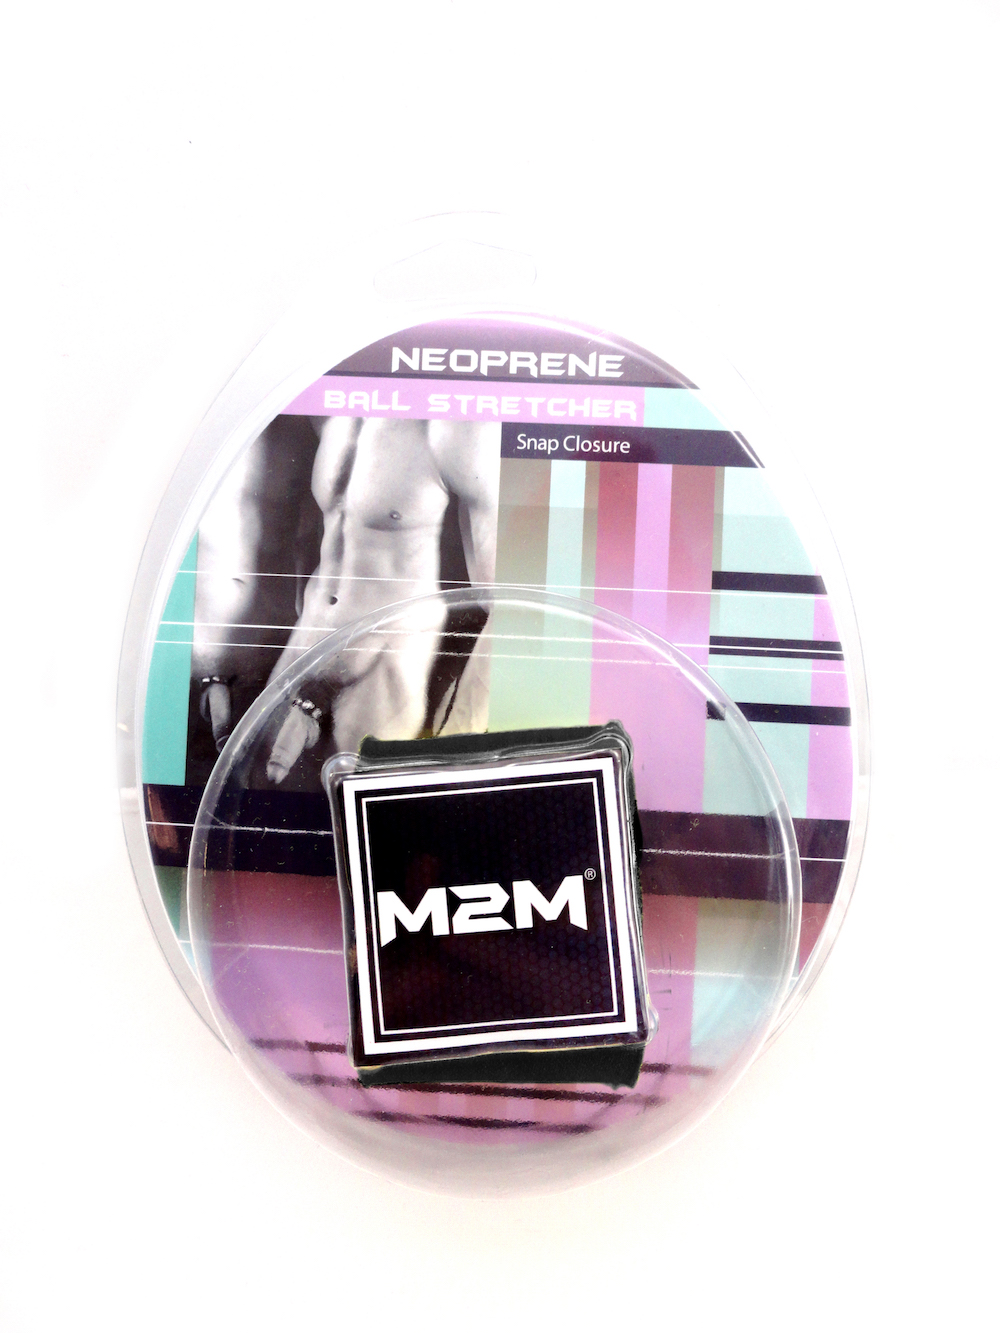 M2M NEOPRENE BALL STRETCHER 1 INCH - BLACK